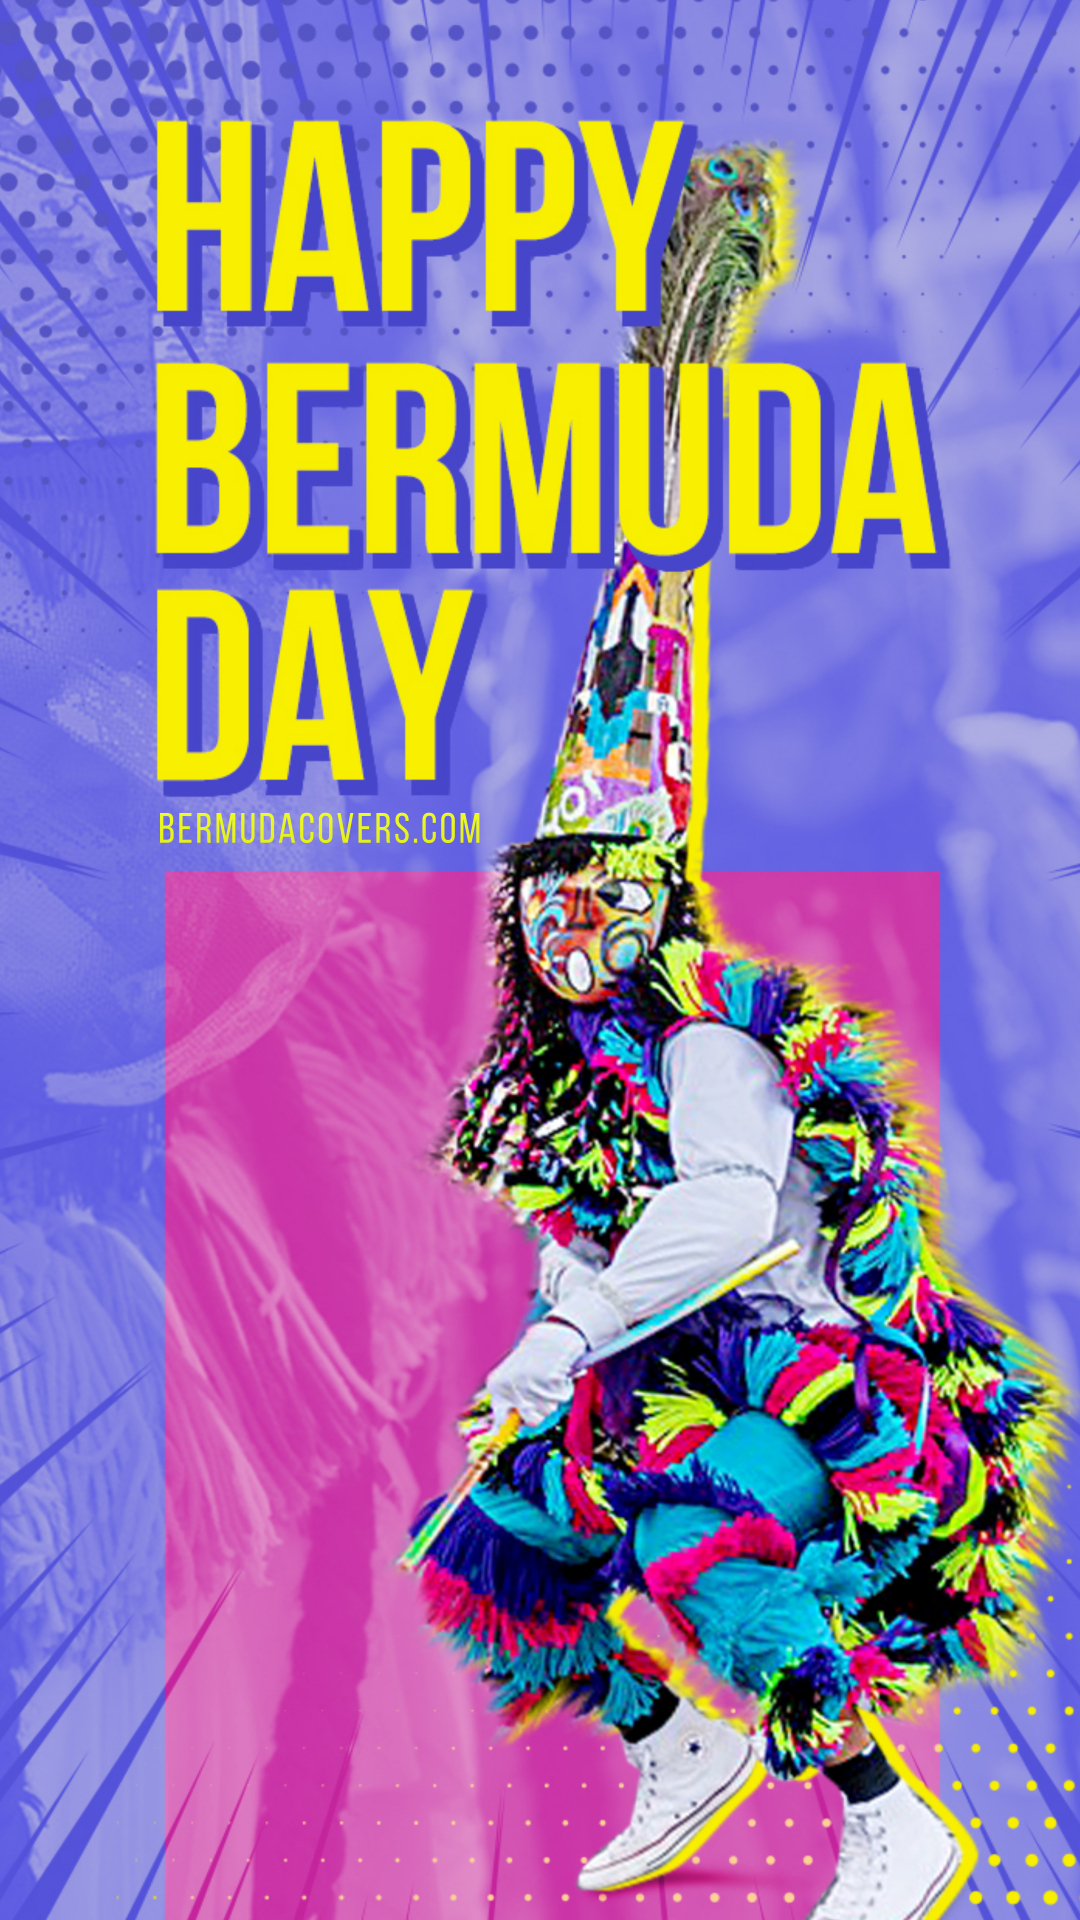 Sunbright-Gombey-Happy-Bermuda-Day-phone-screensaver-wallpaper-social-media-Facebook-profile-cover-grapghic-293409-6